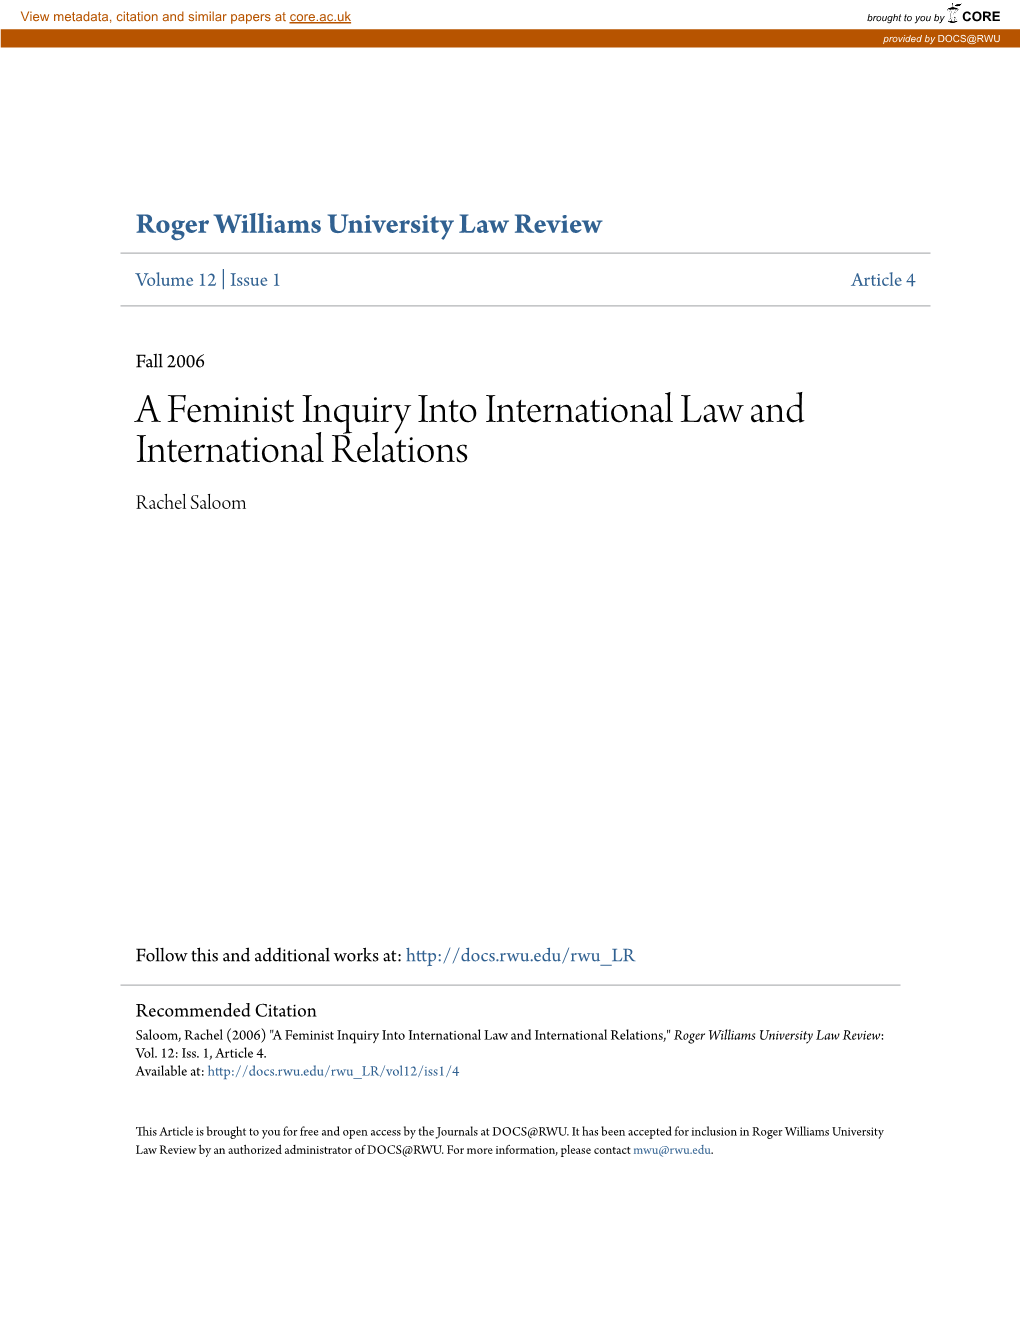 A Feminist Inquiry Into International Law and International Relations Rachel Saloom